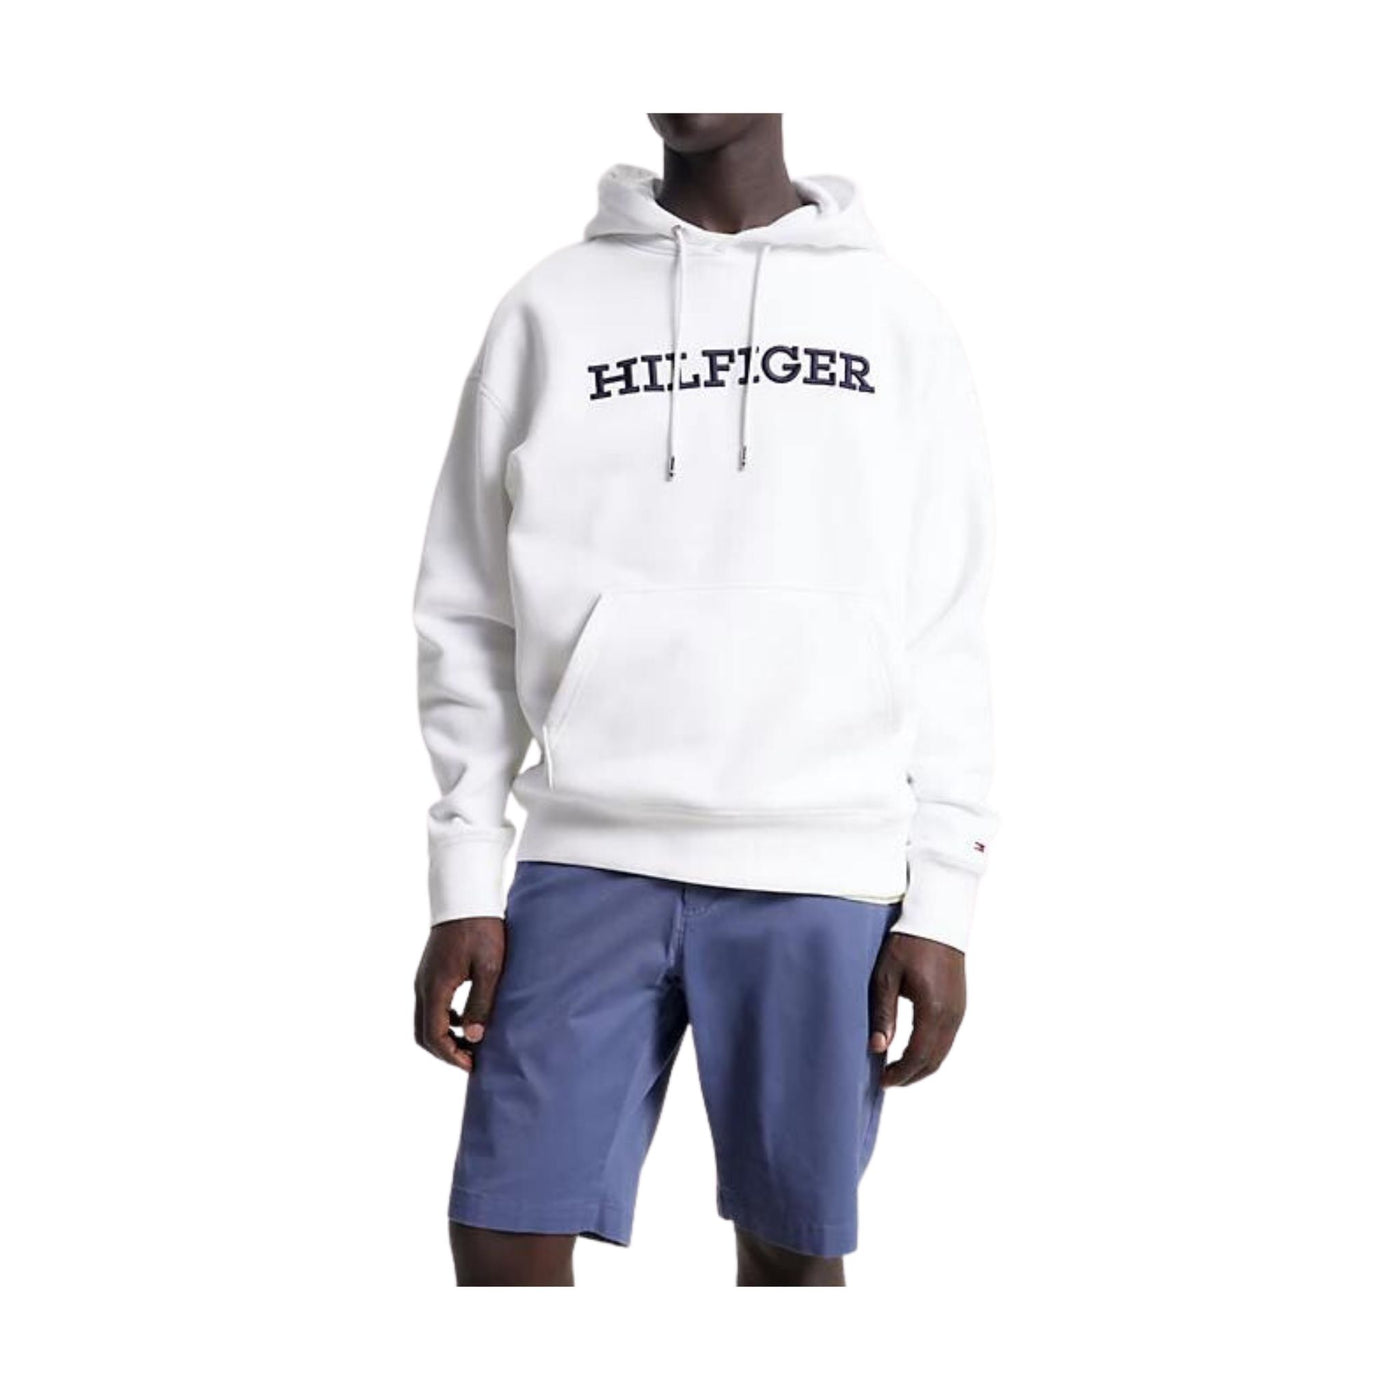 Men's sweatshirt with hood and logo